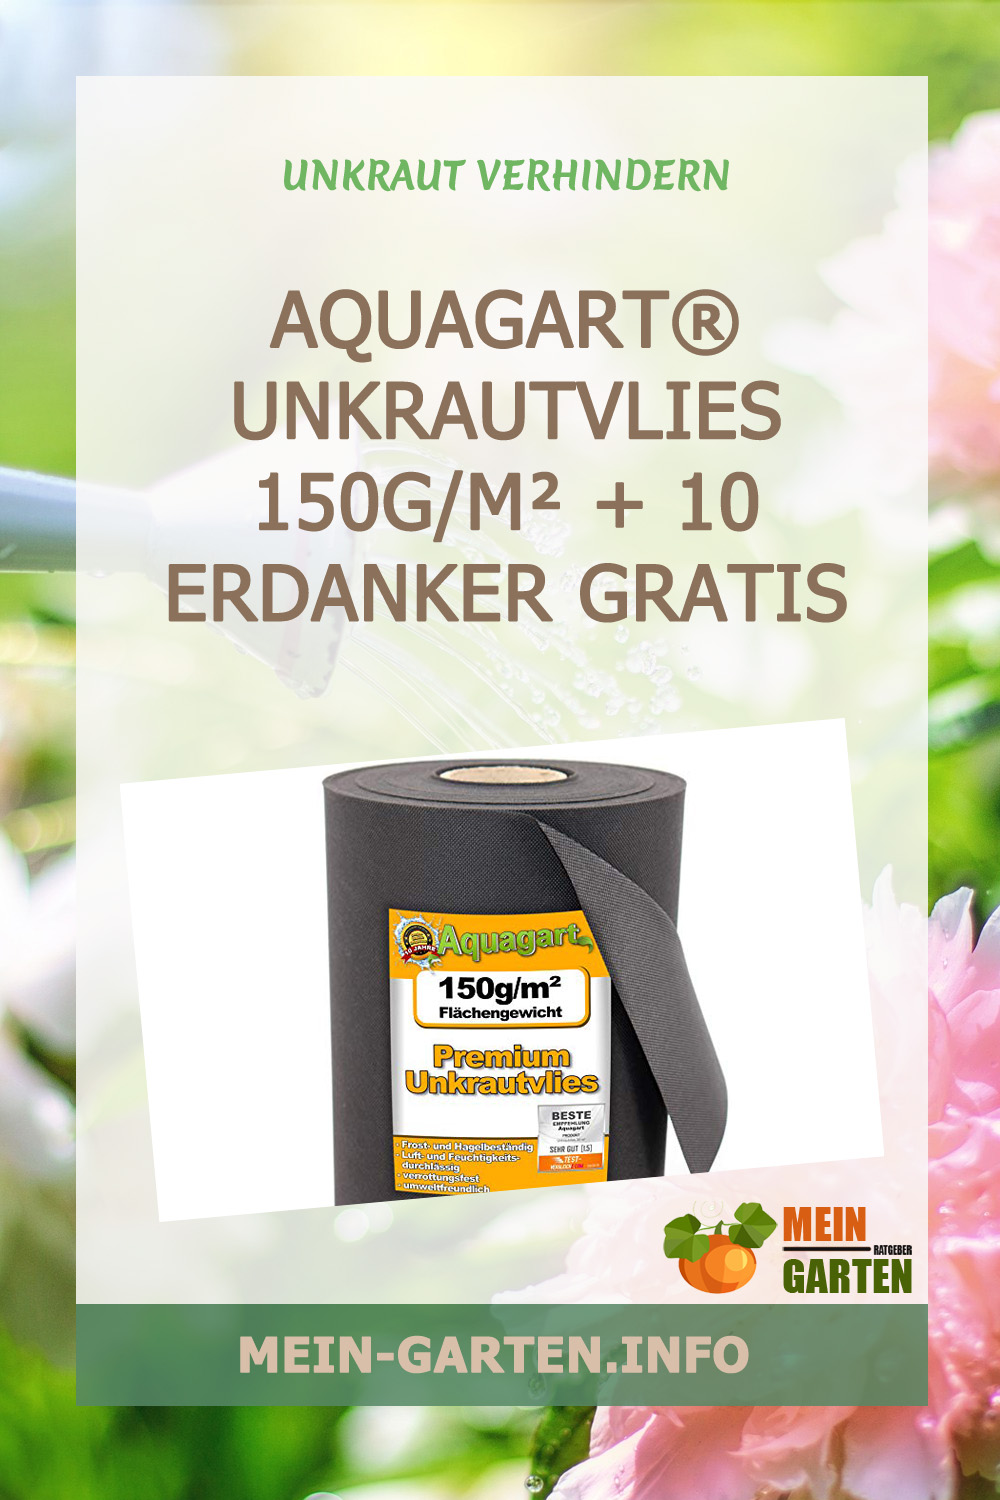 Aquagart® Unkrautvlies 150g/m² + 10 Erdanker Gratis günstig kaufen